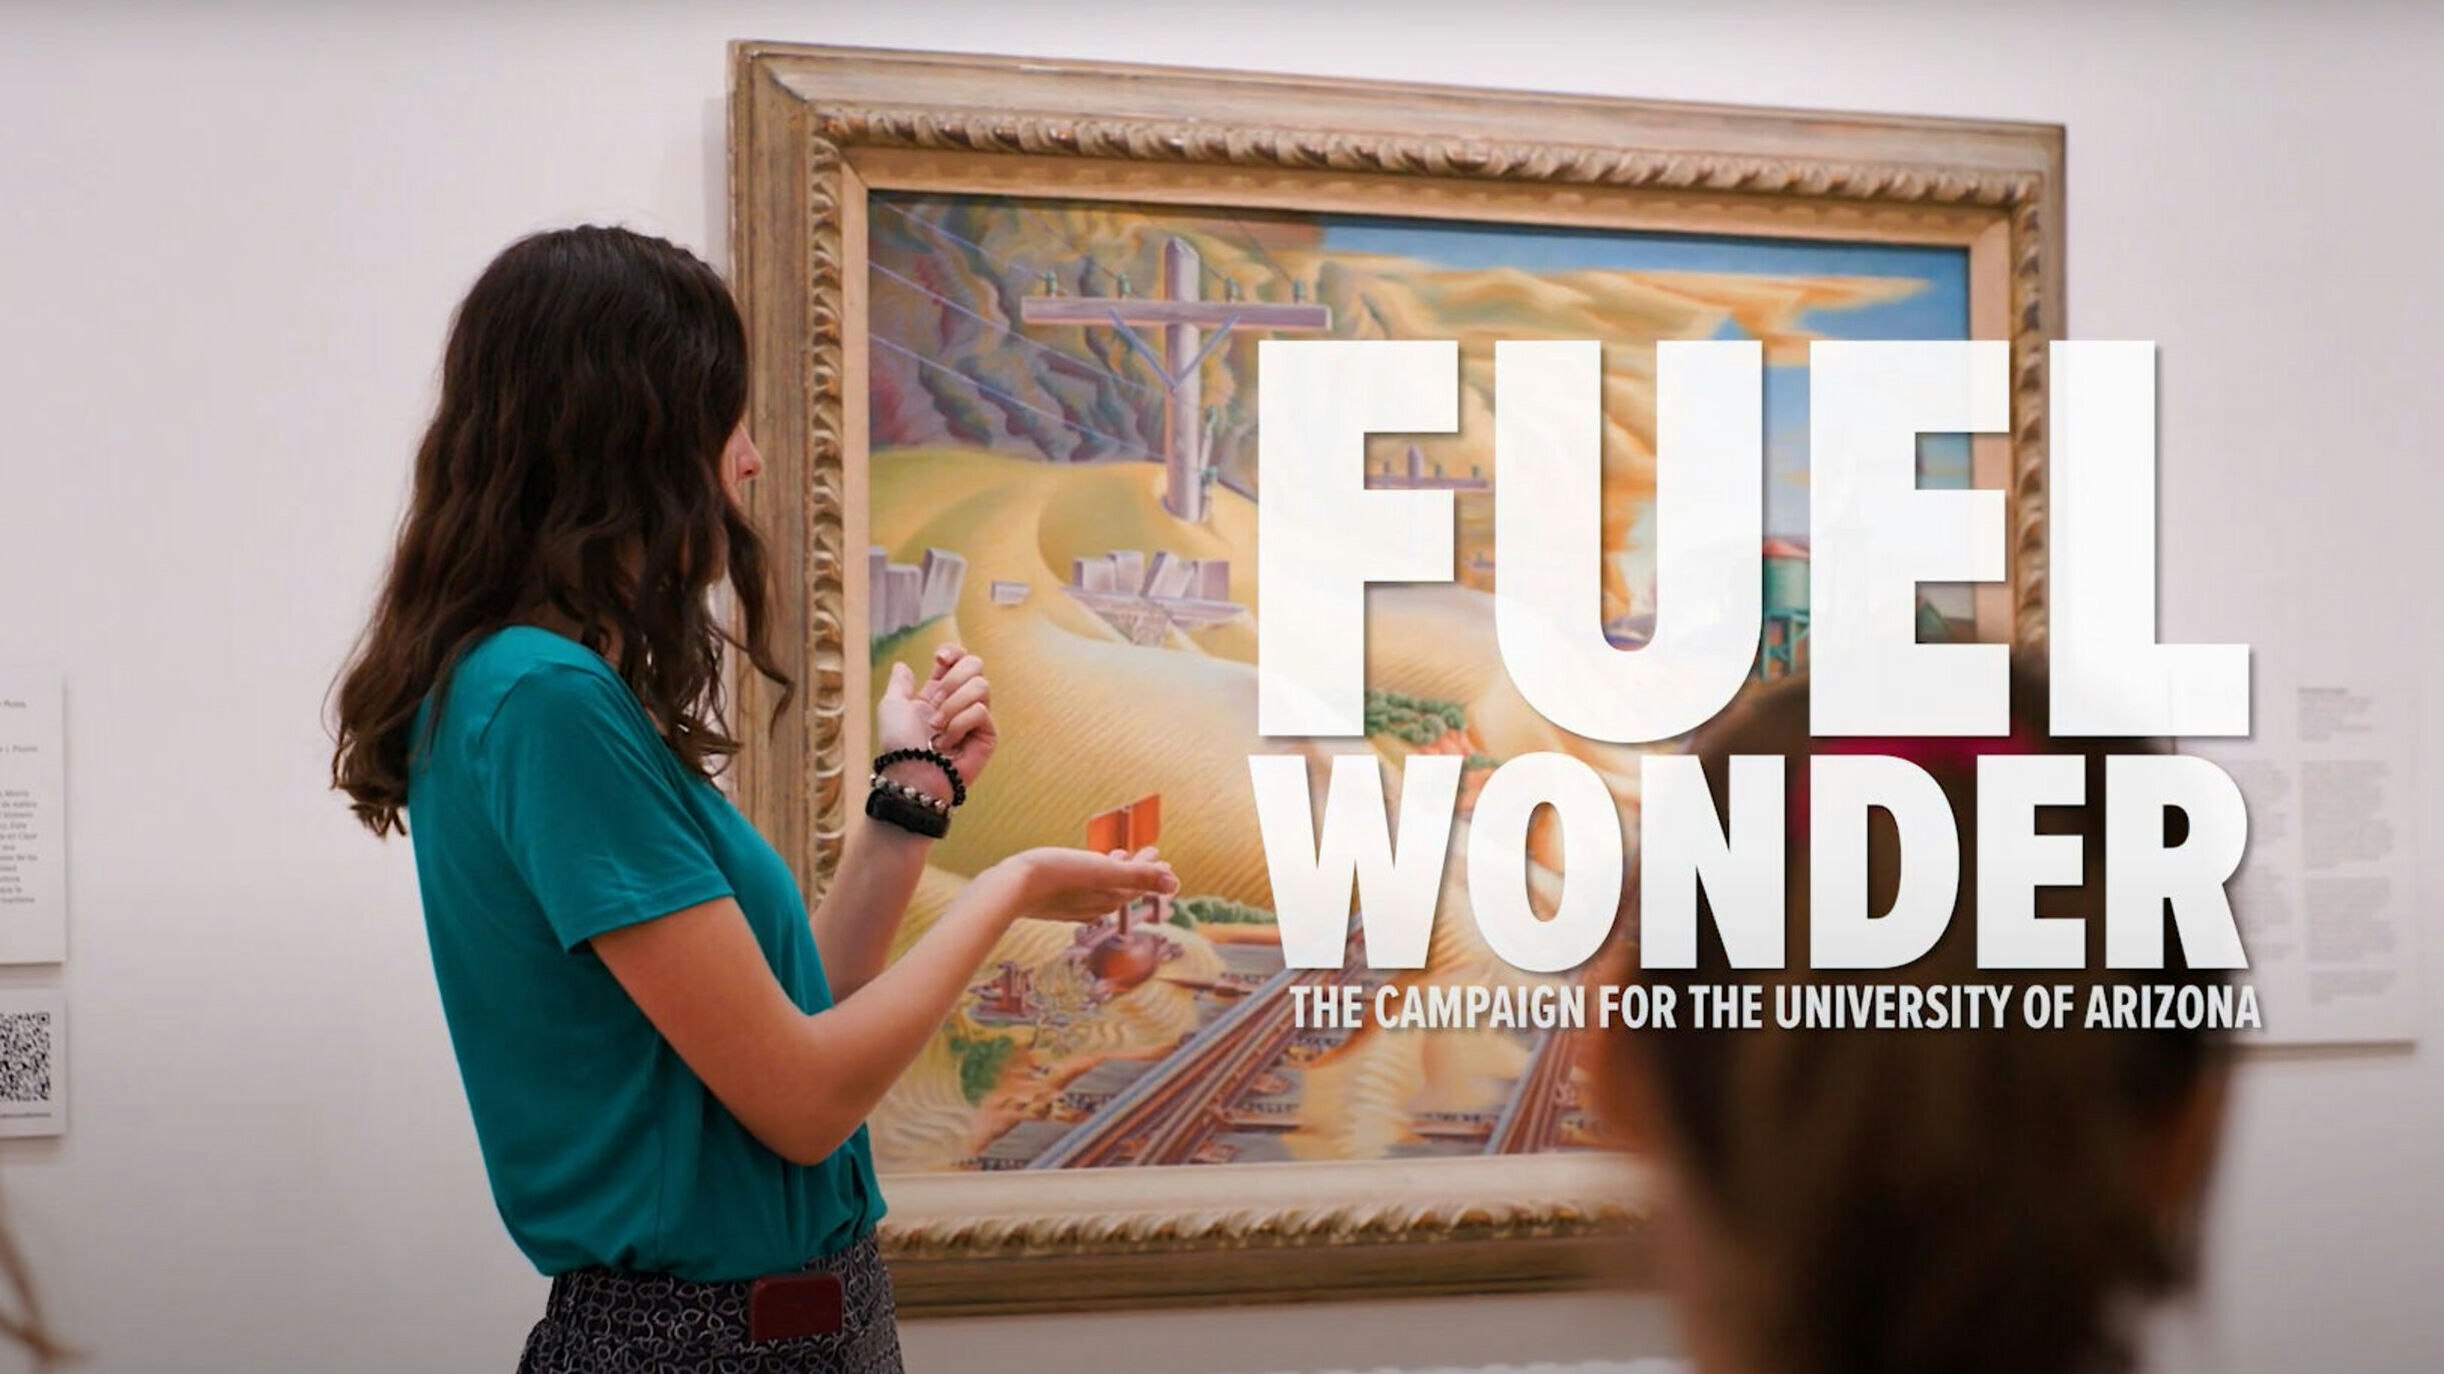 11 3 23 fuel wonder campaign story uama university arizona museum art